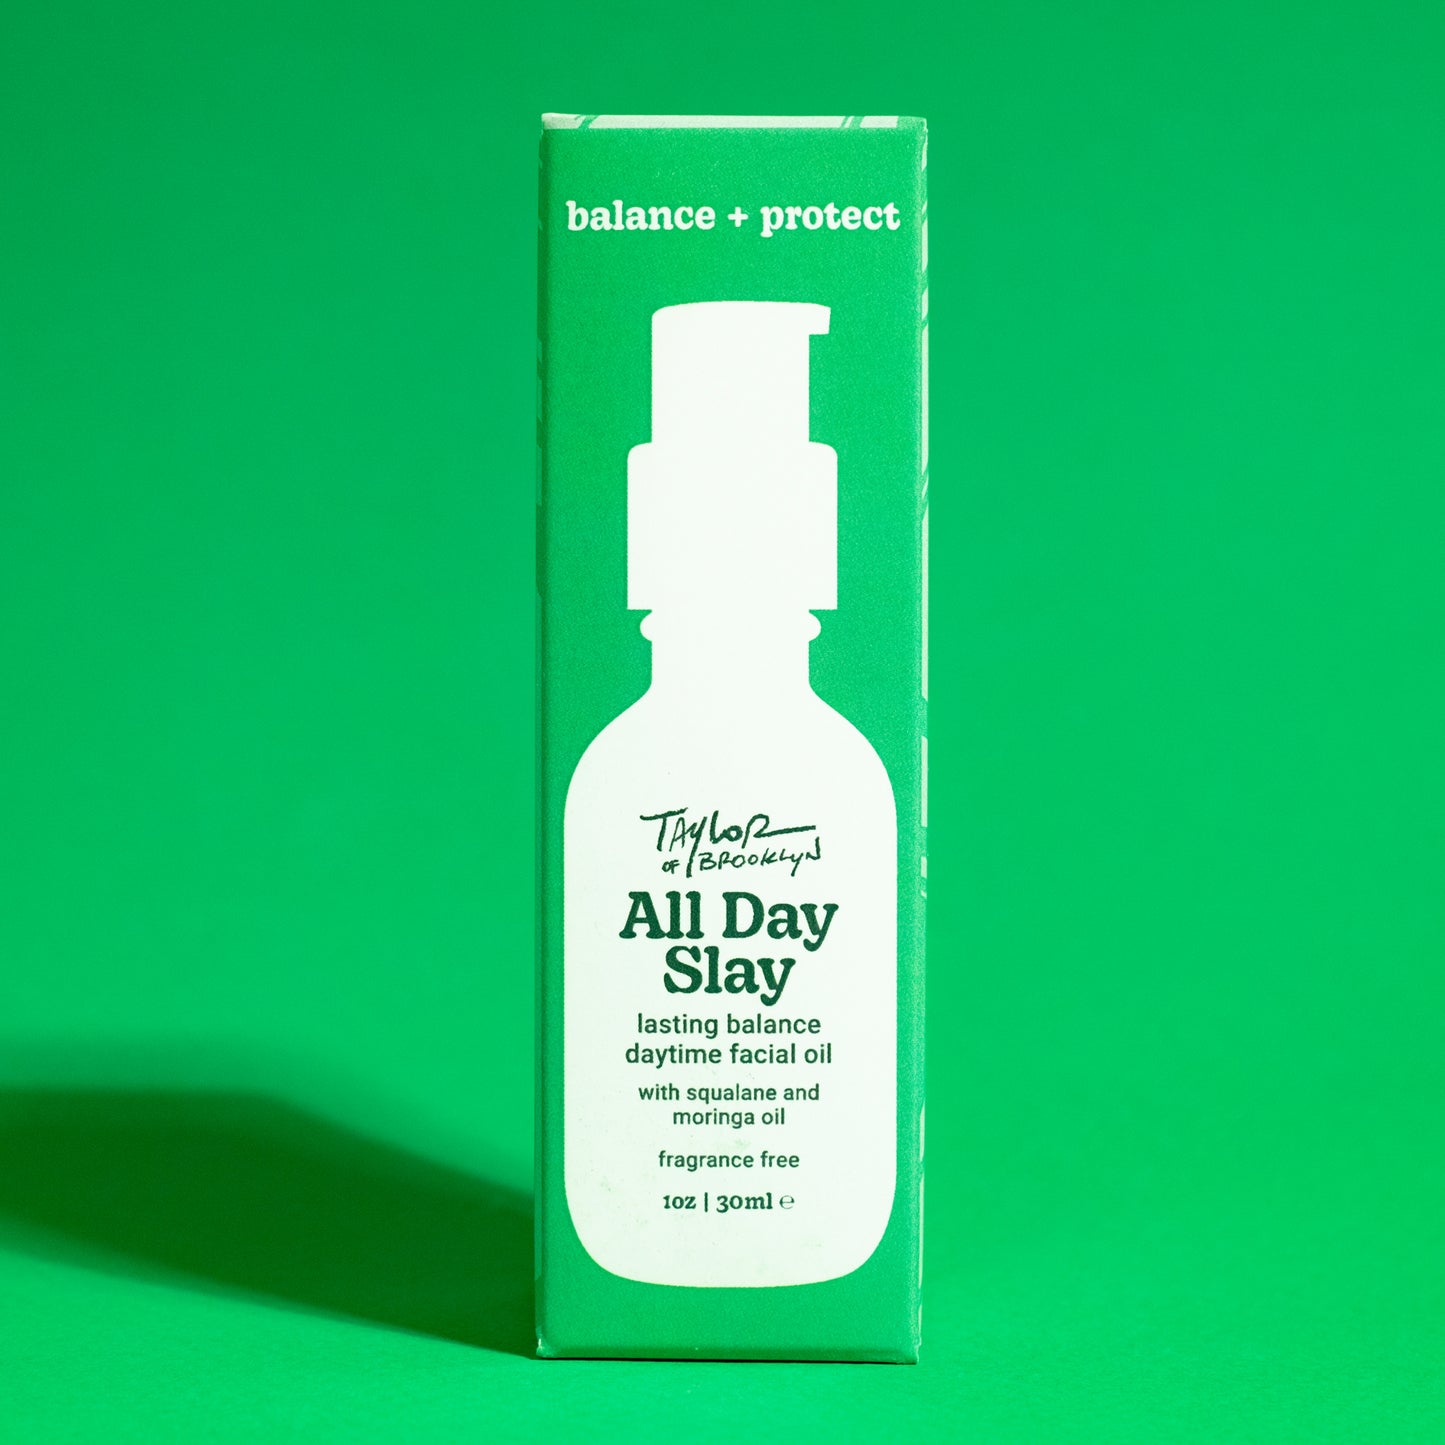 All Day Slay - lasting balance daytime facial oil